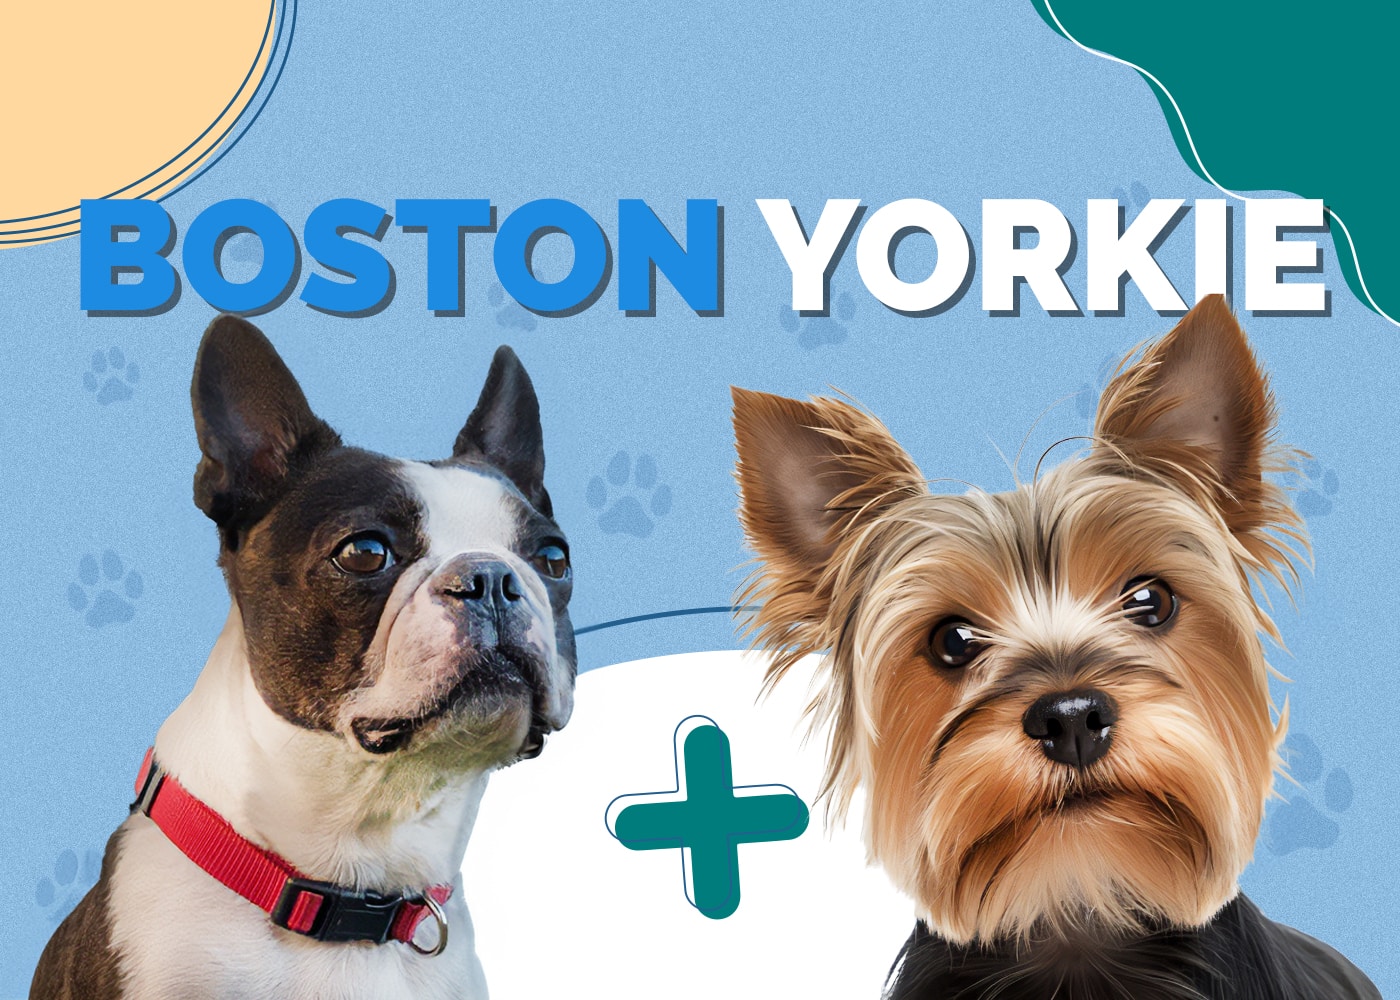 Boston Yorkie (Boston Terrier & Yorkshire Terrier Mix)